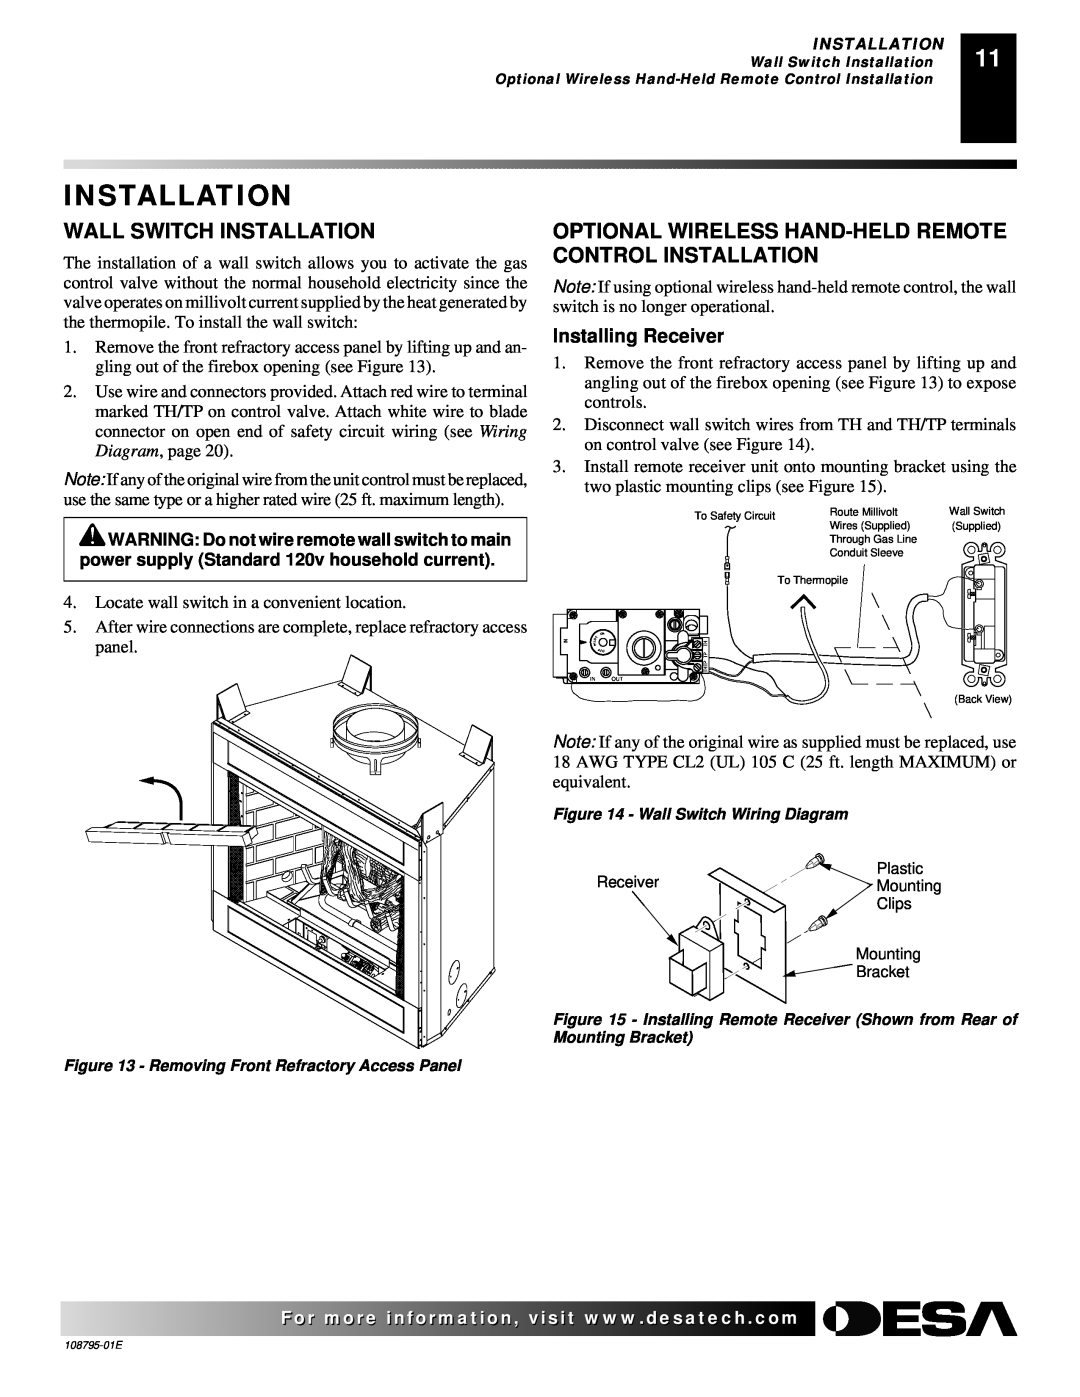 Desa VM42, M36 installation manual Wall Switch Installation 